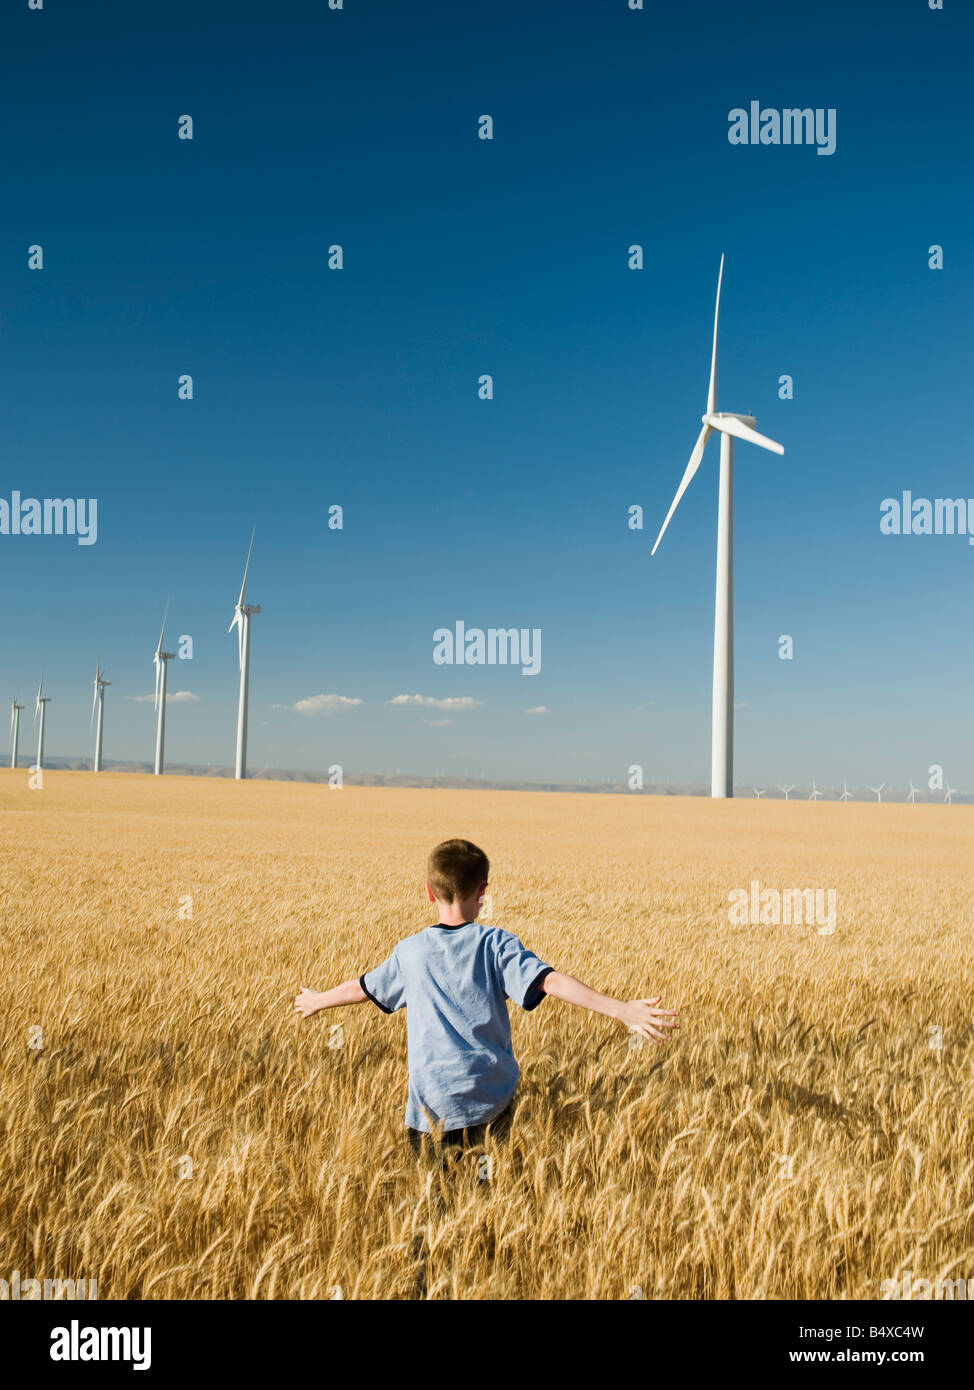 Boy running through field on wind farm Banque D'Images